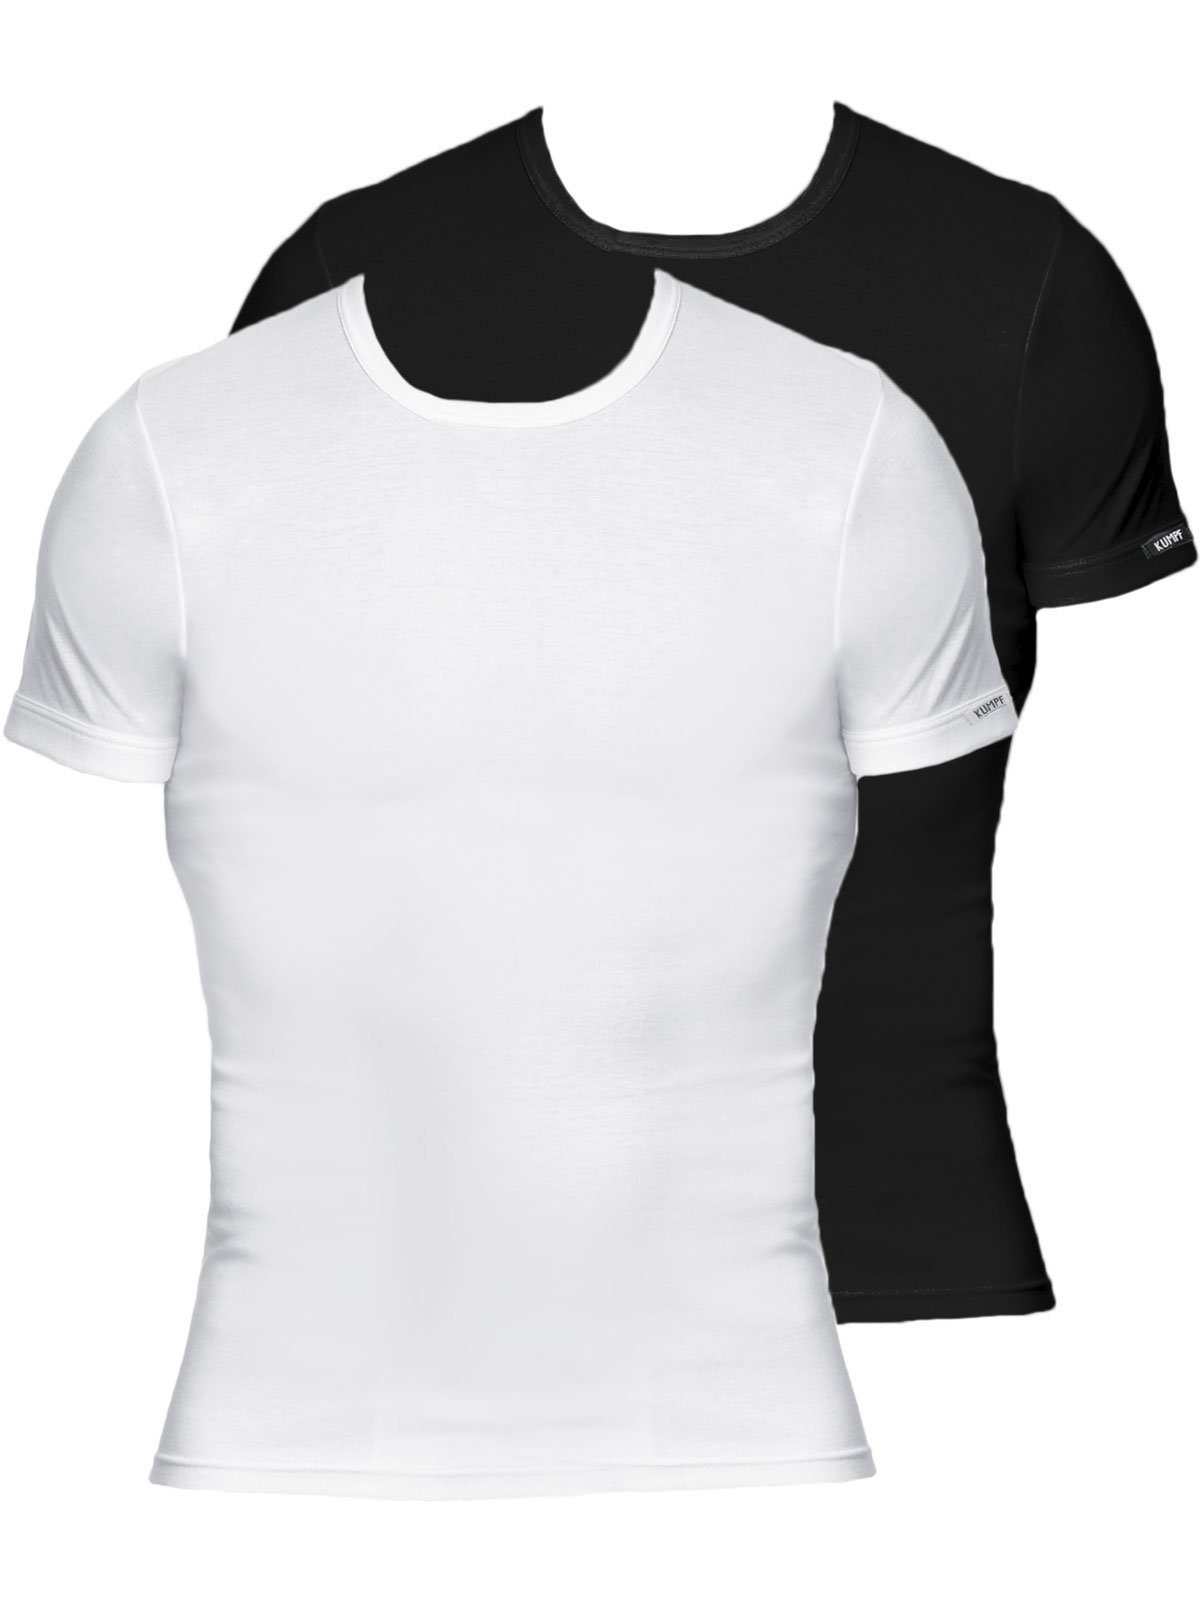 KUMPF Unterziehshirt 2er Sparpack Herren T-Shirt Bio Cotton (Spar-Set, 2-St) hohe Markenqualität schwarz weiss